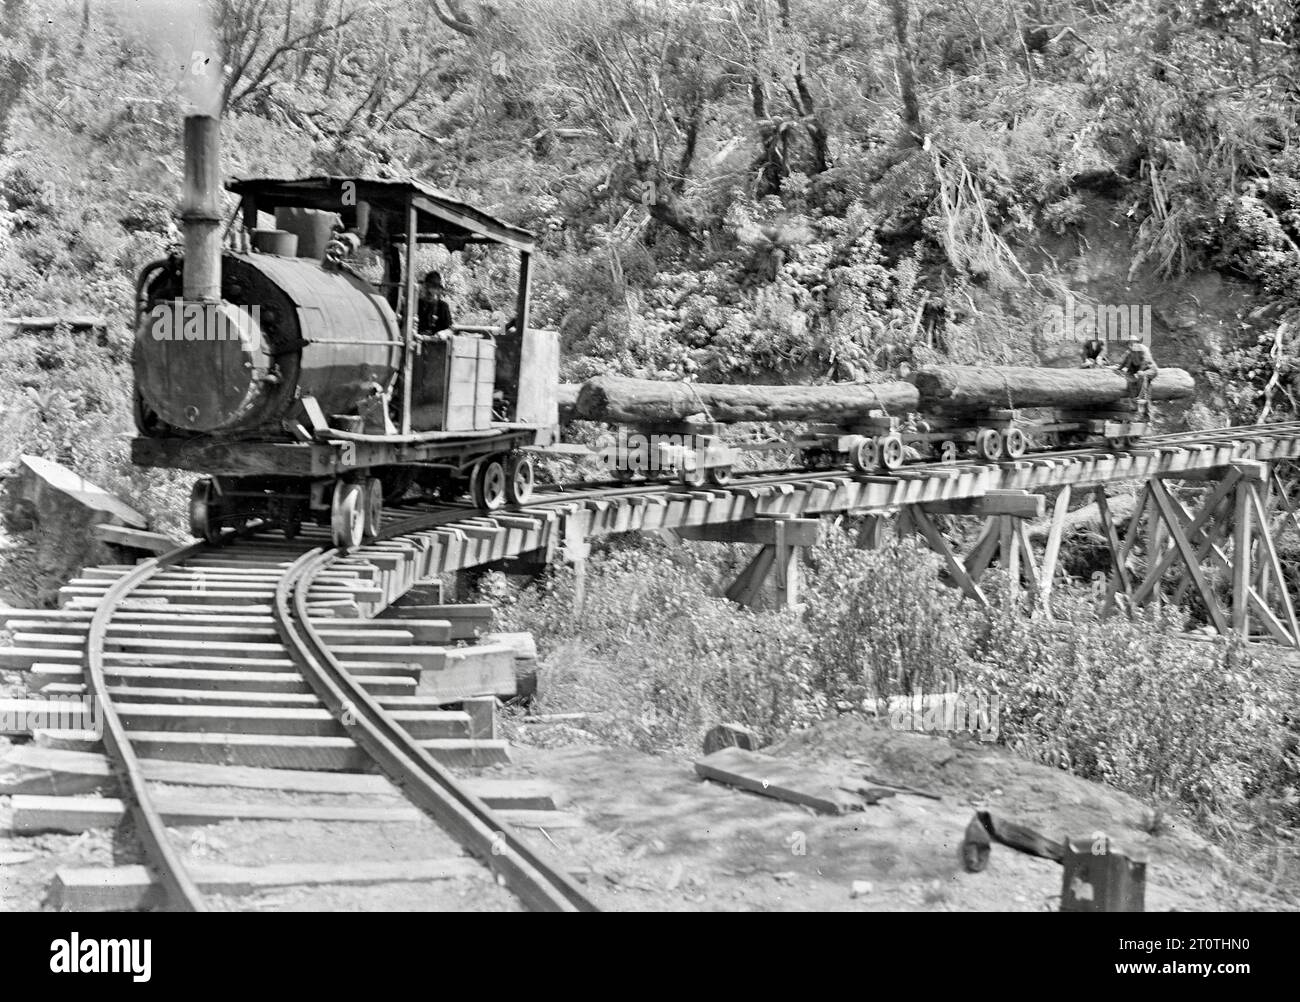 Albert Percy Godber (fotografo neozelandese) - 'Knight's tram, Raurimu' - Hauling Logs - c1916 Foto Stock